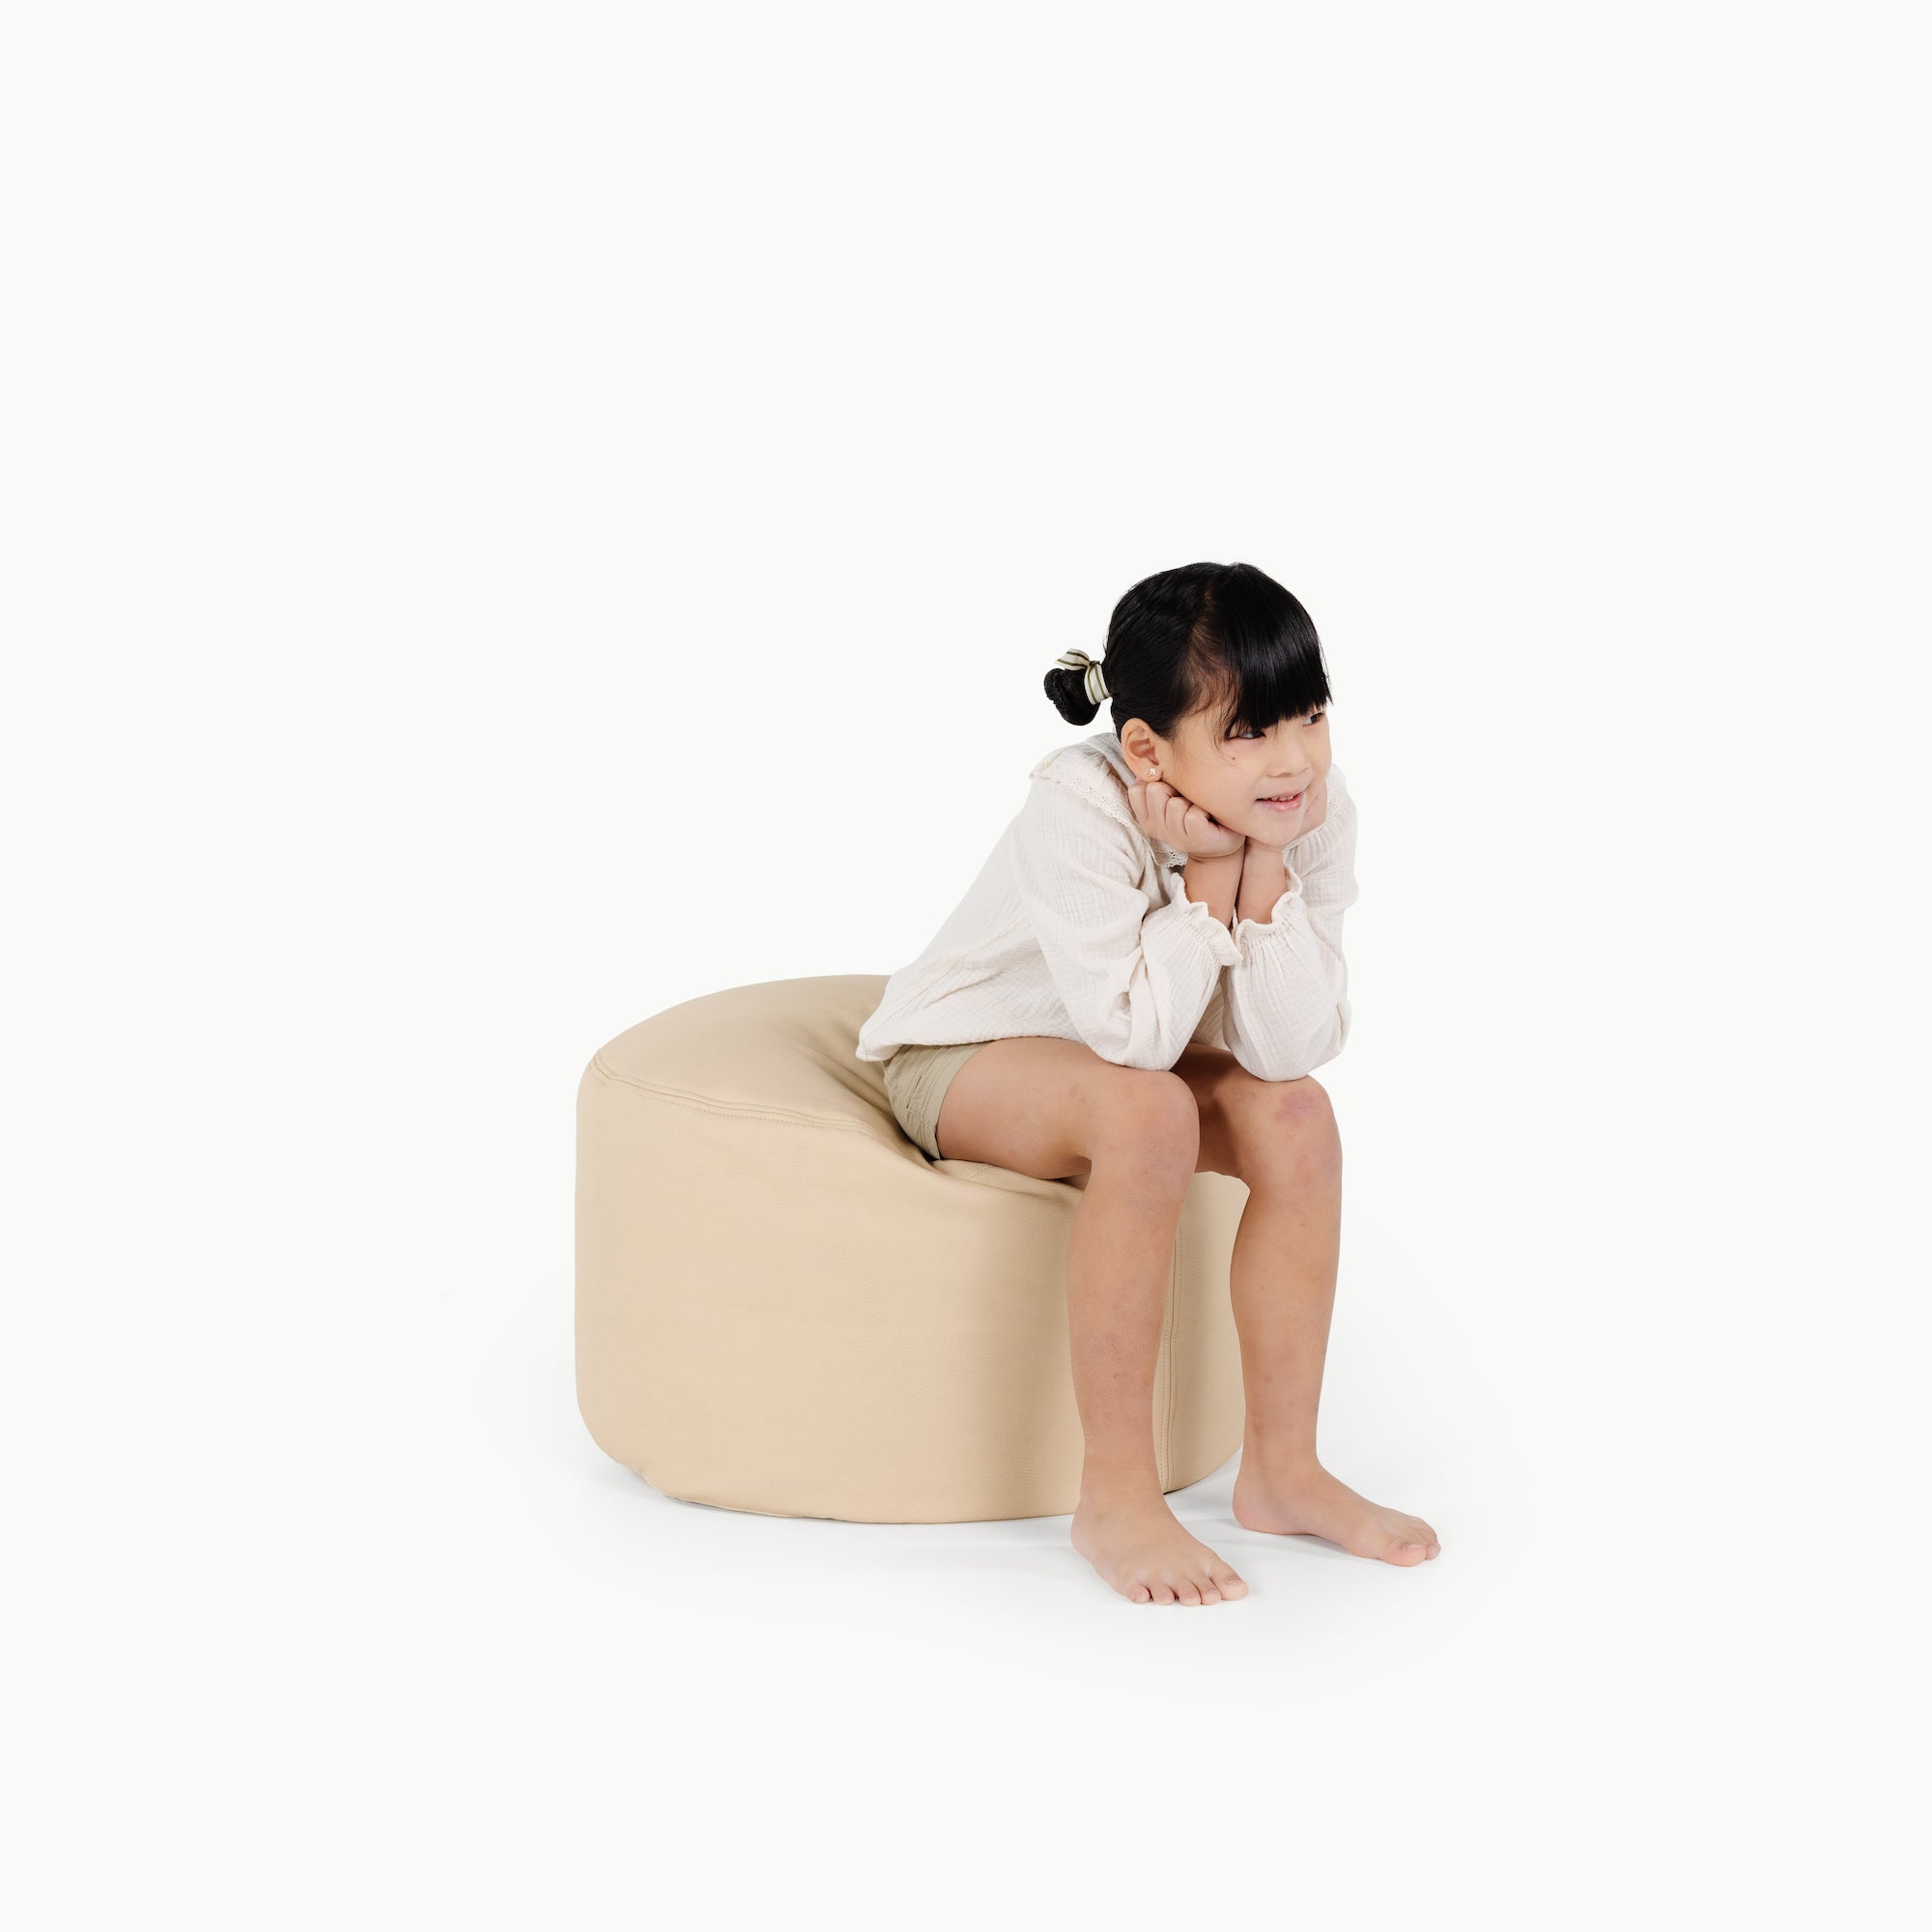 Créme / Circle@little girl sitting on pouf